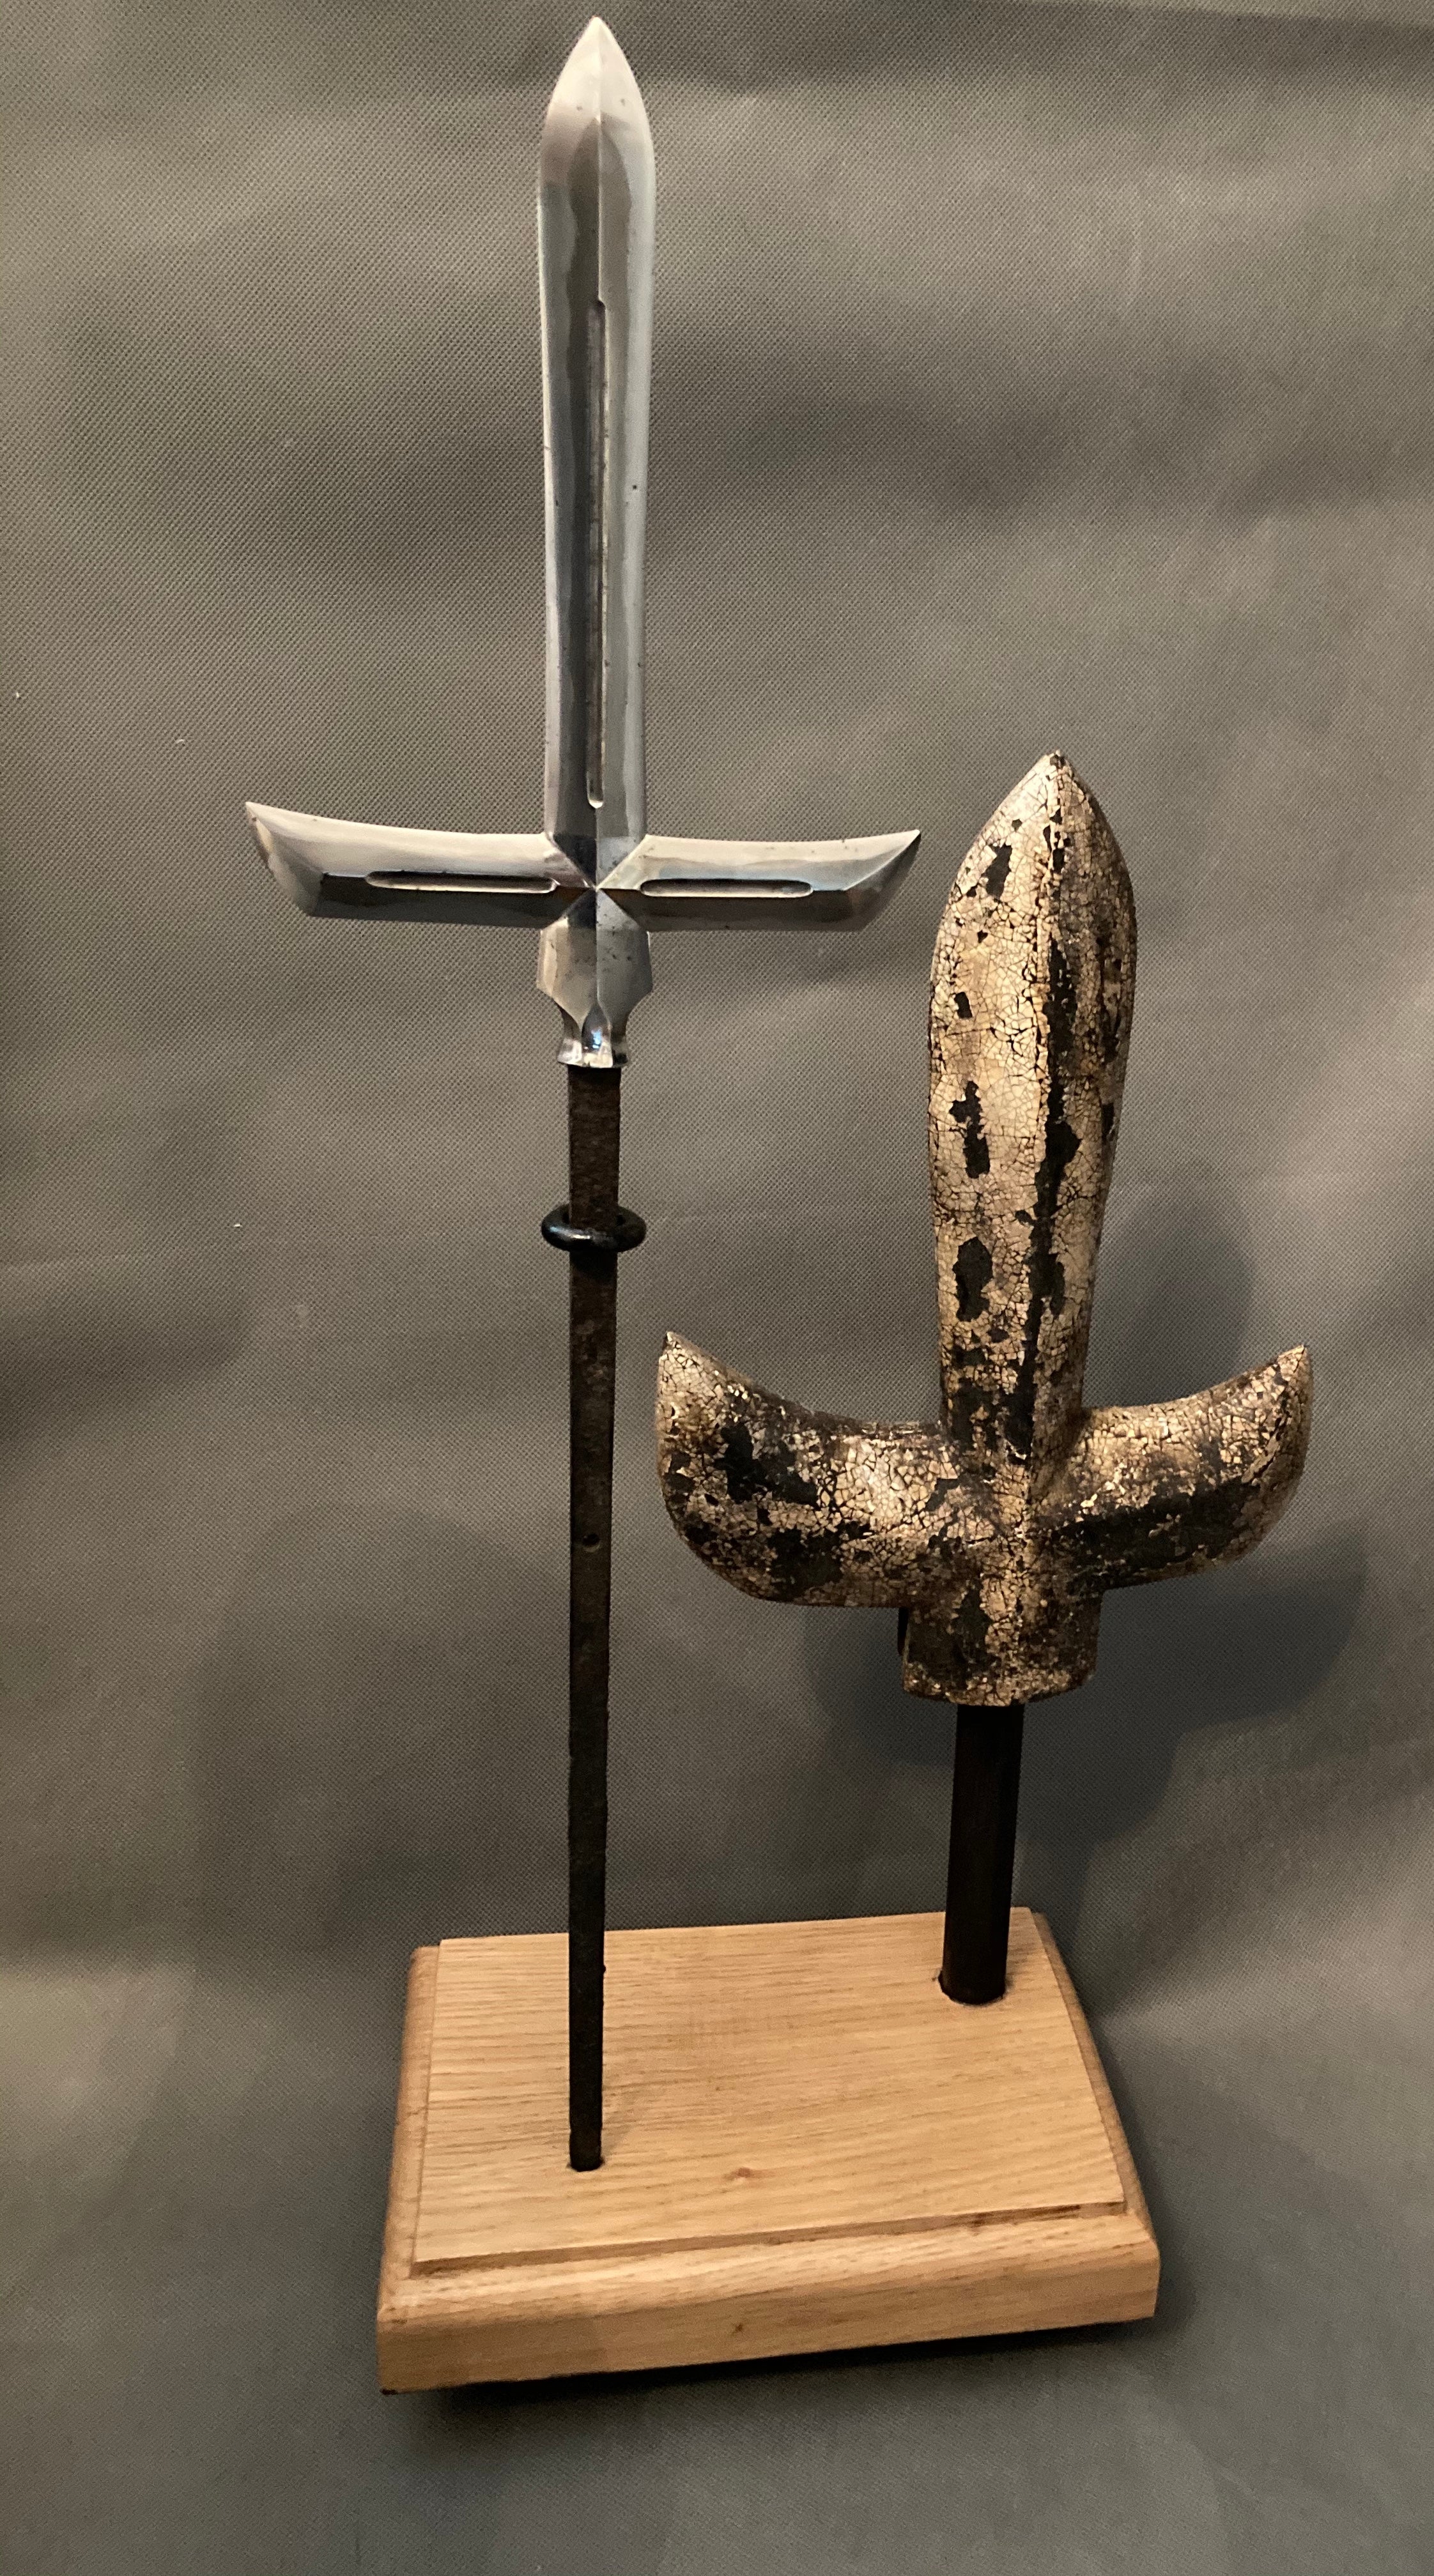 Jumonji yari Antique Samurai spear. - Yamazakura